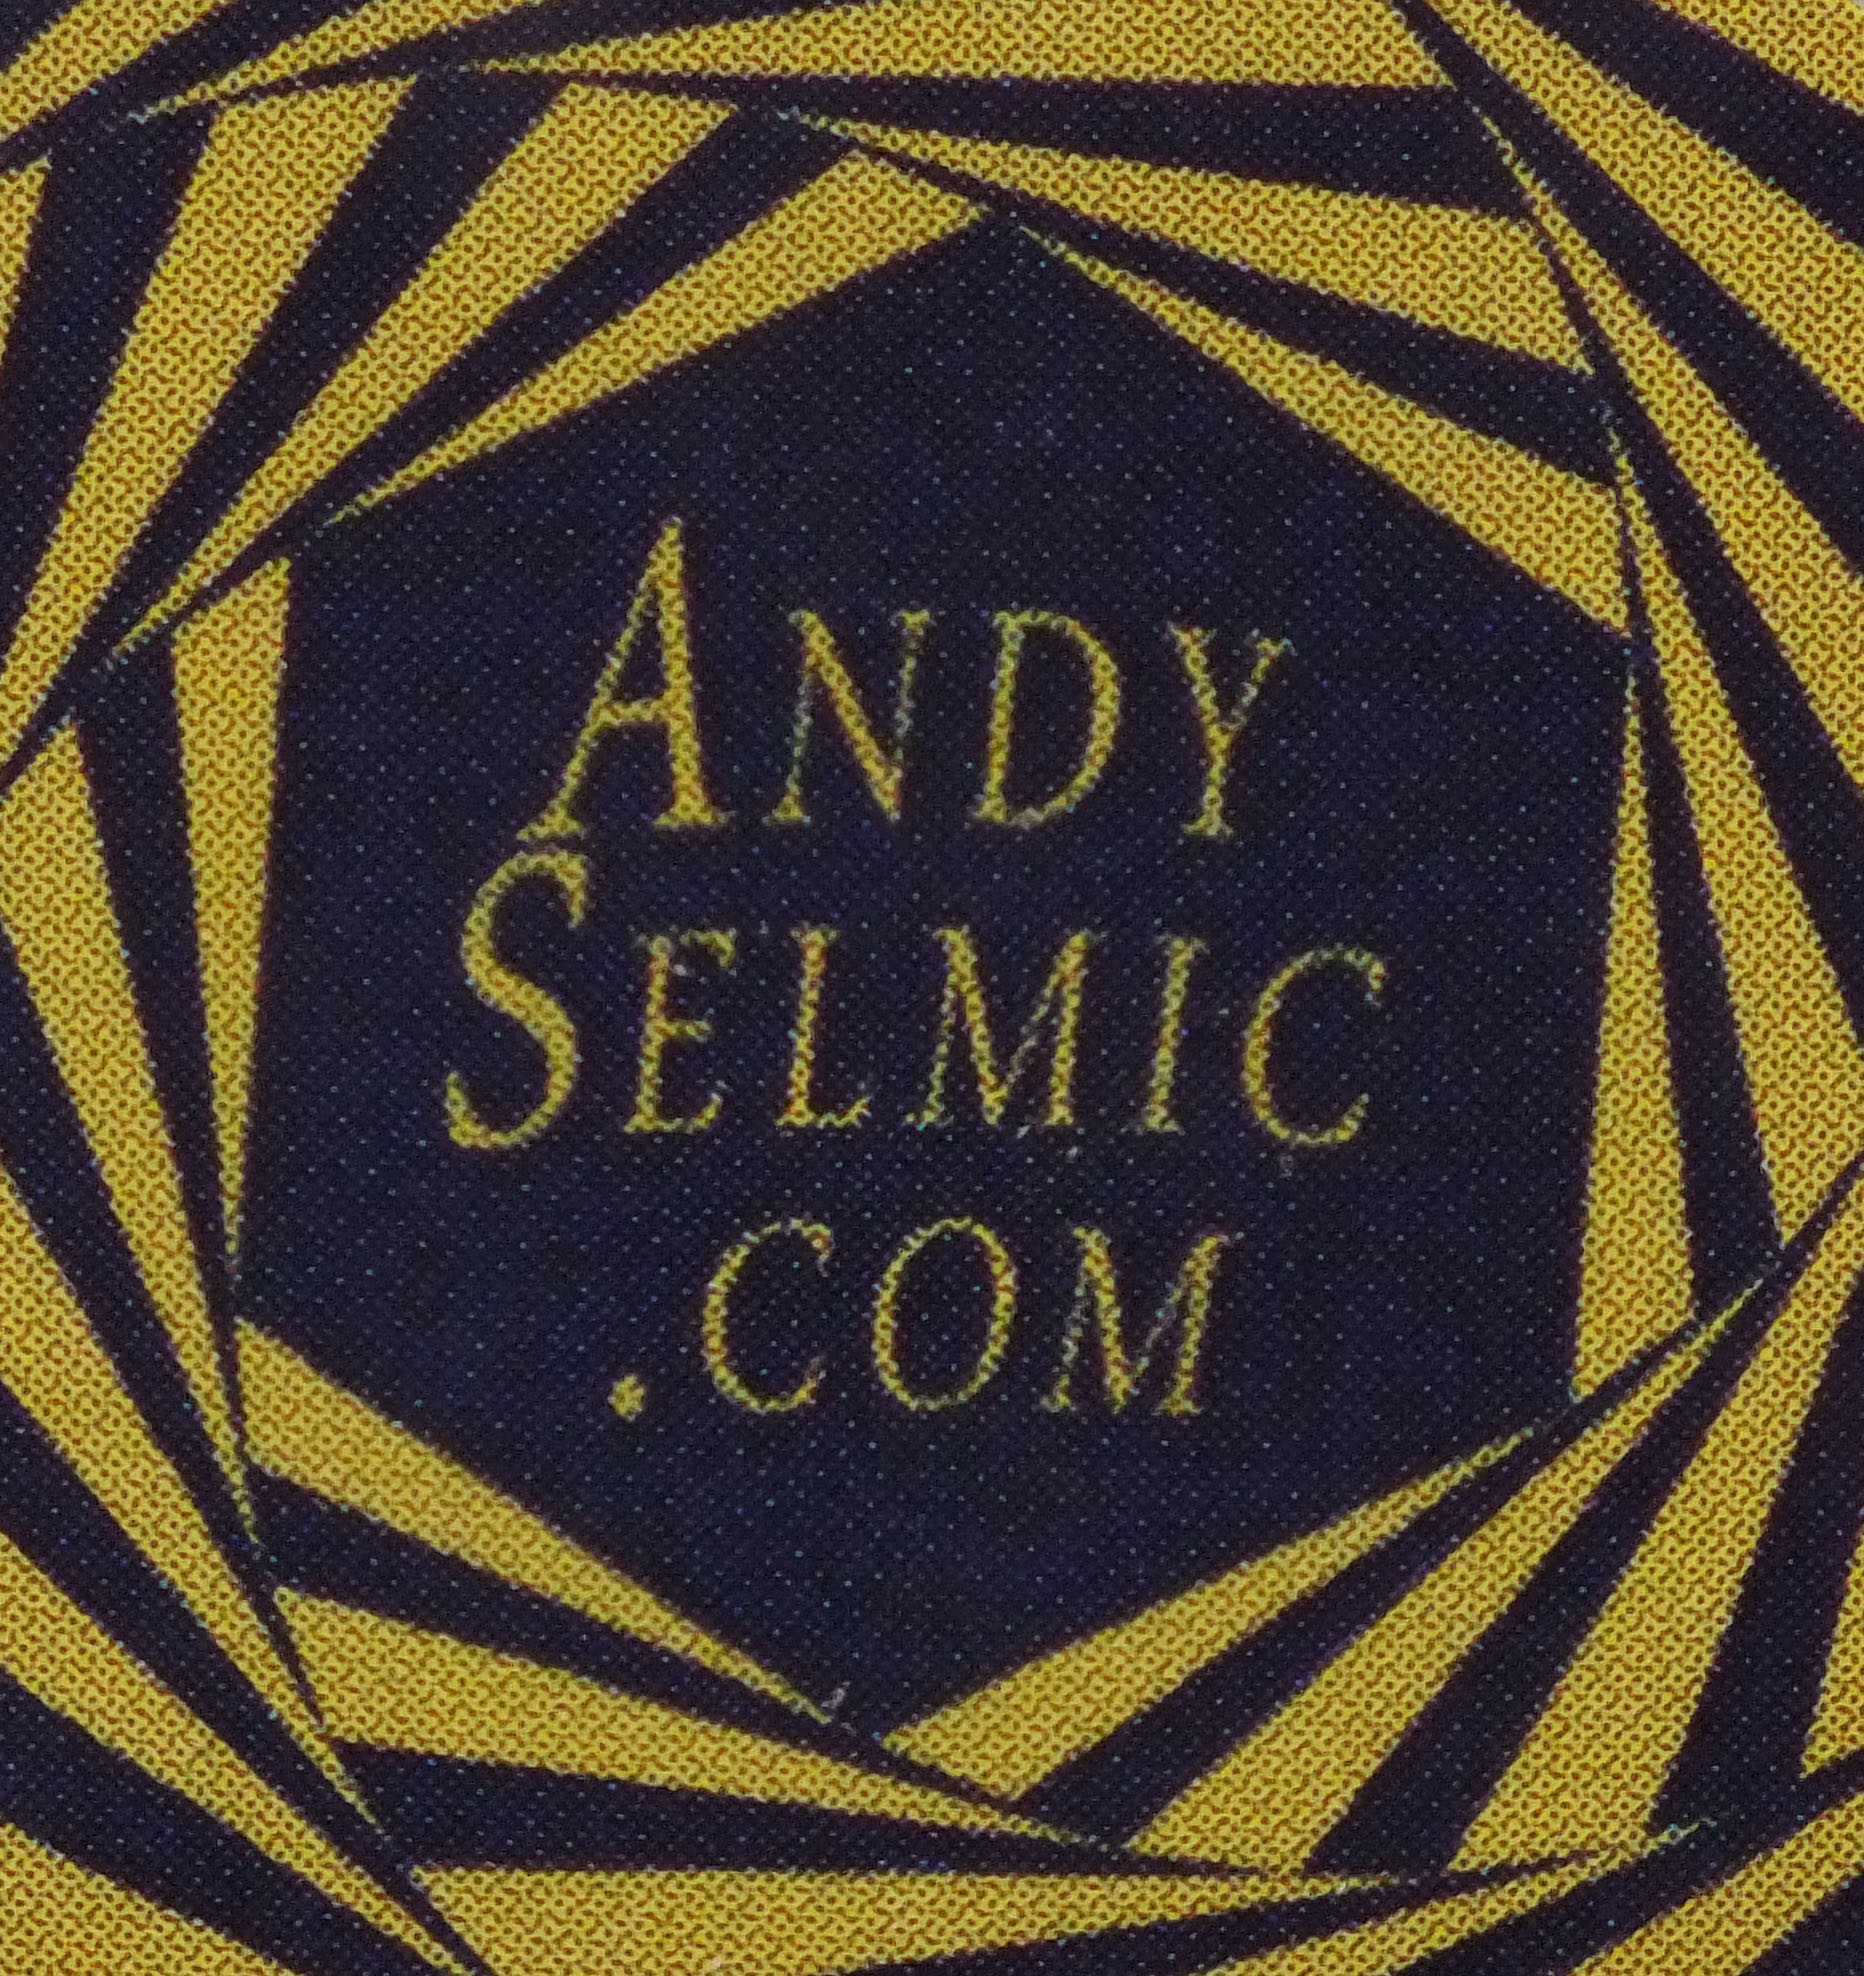 Andy Selmic Furniture